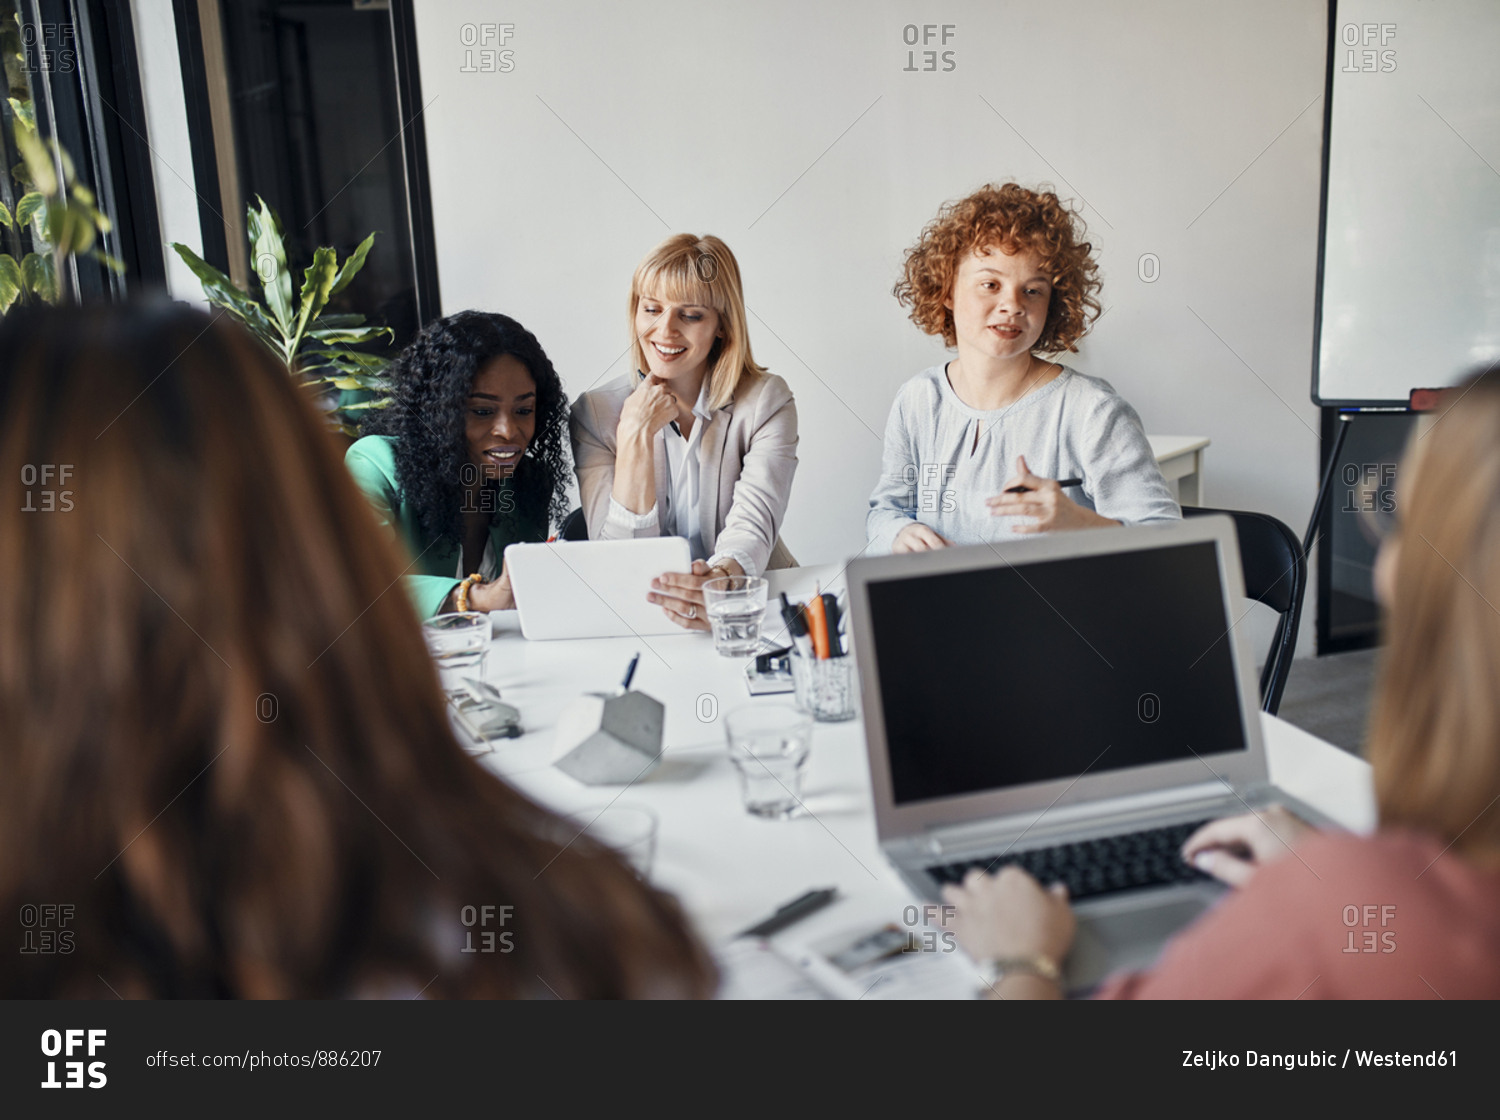 Businesswomen having a meeting in office